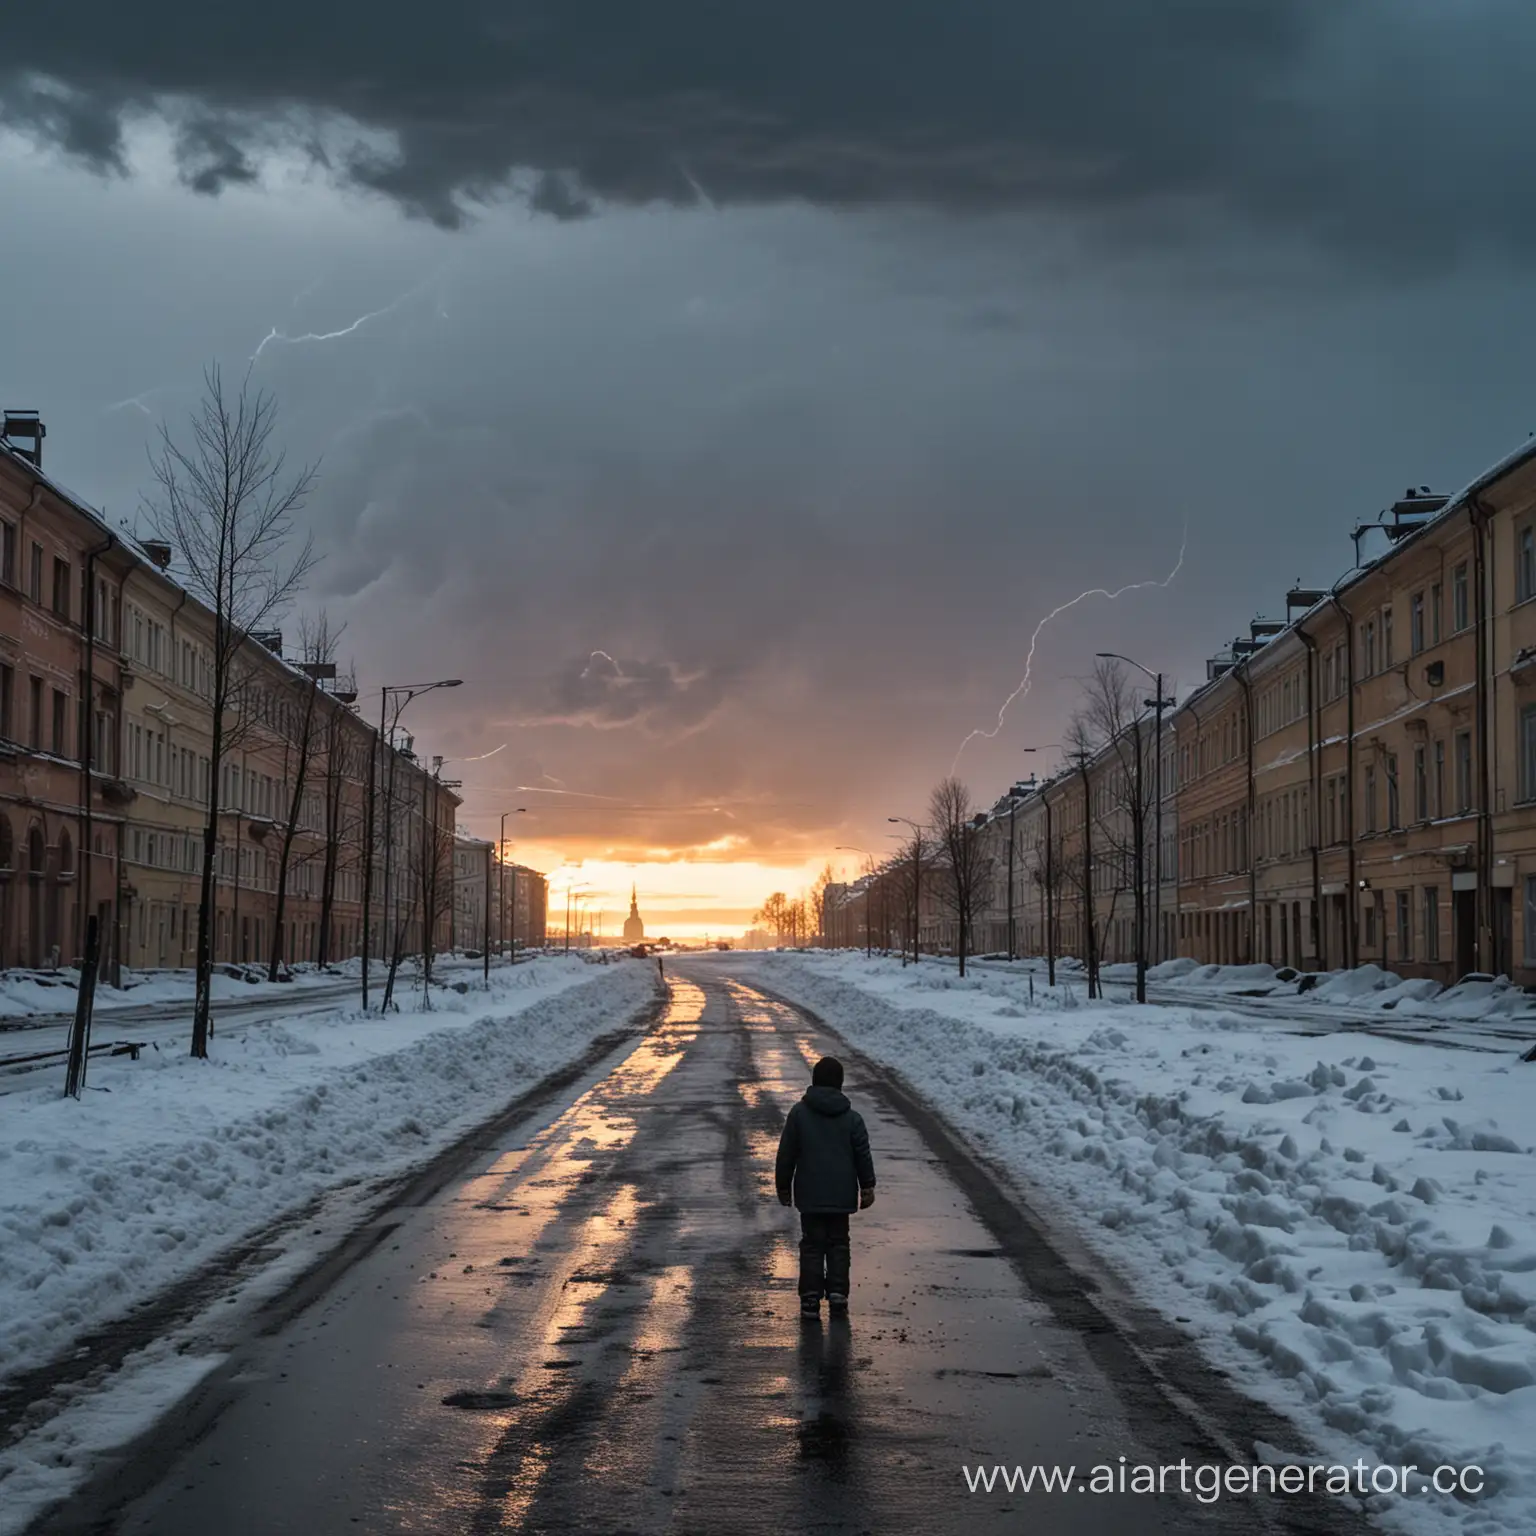 Young-Boy-Contemplating-Winter-Chaos-in-Urban-Leningrad